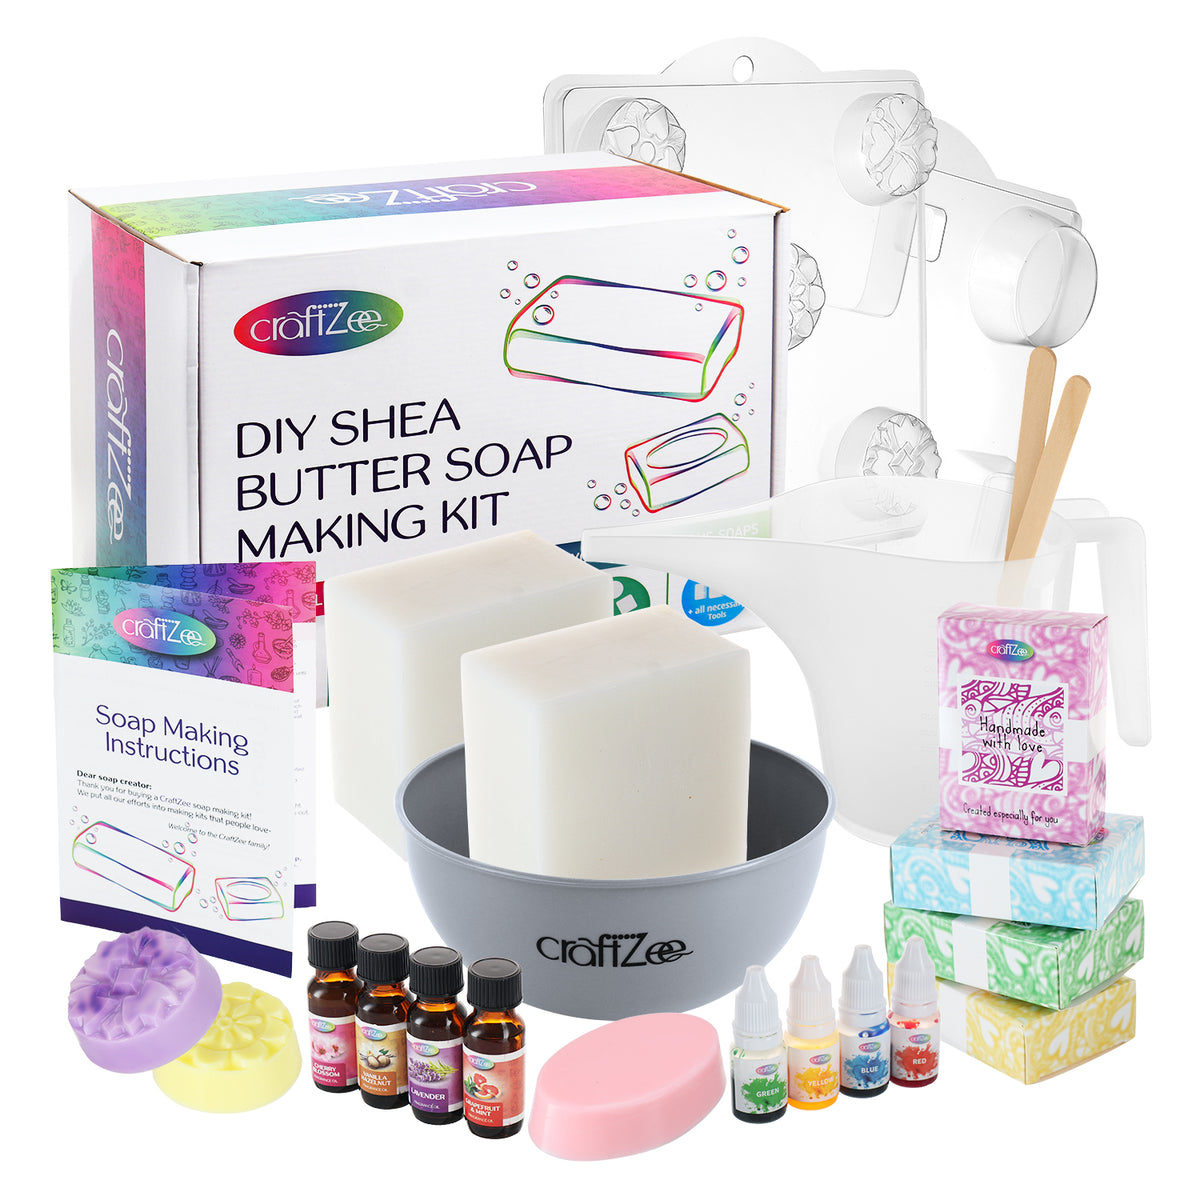 DIY Kits for Making Candles, Soap, Shampoo, Skincare